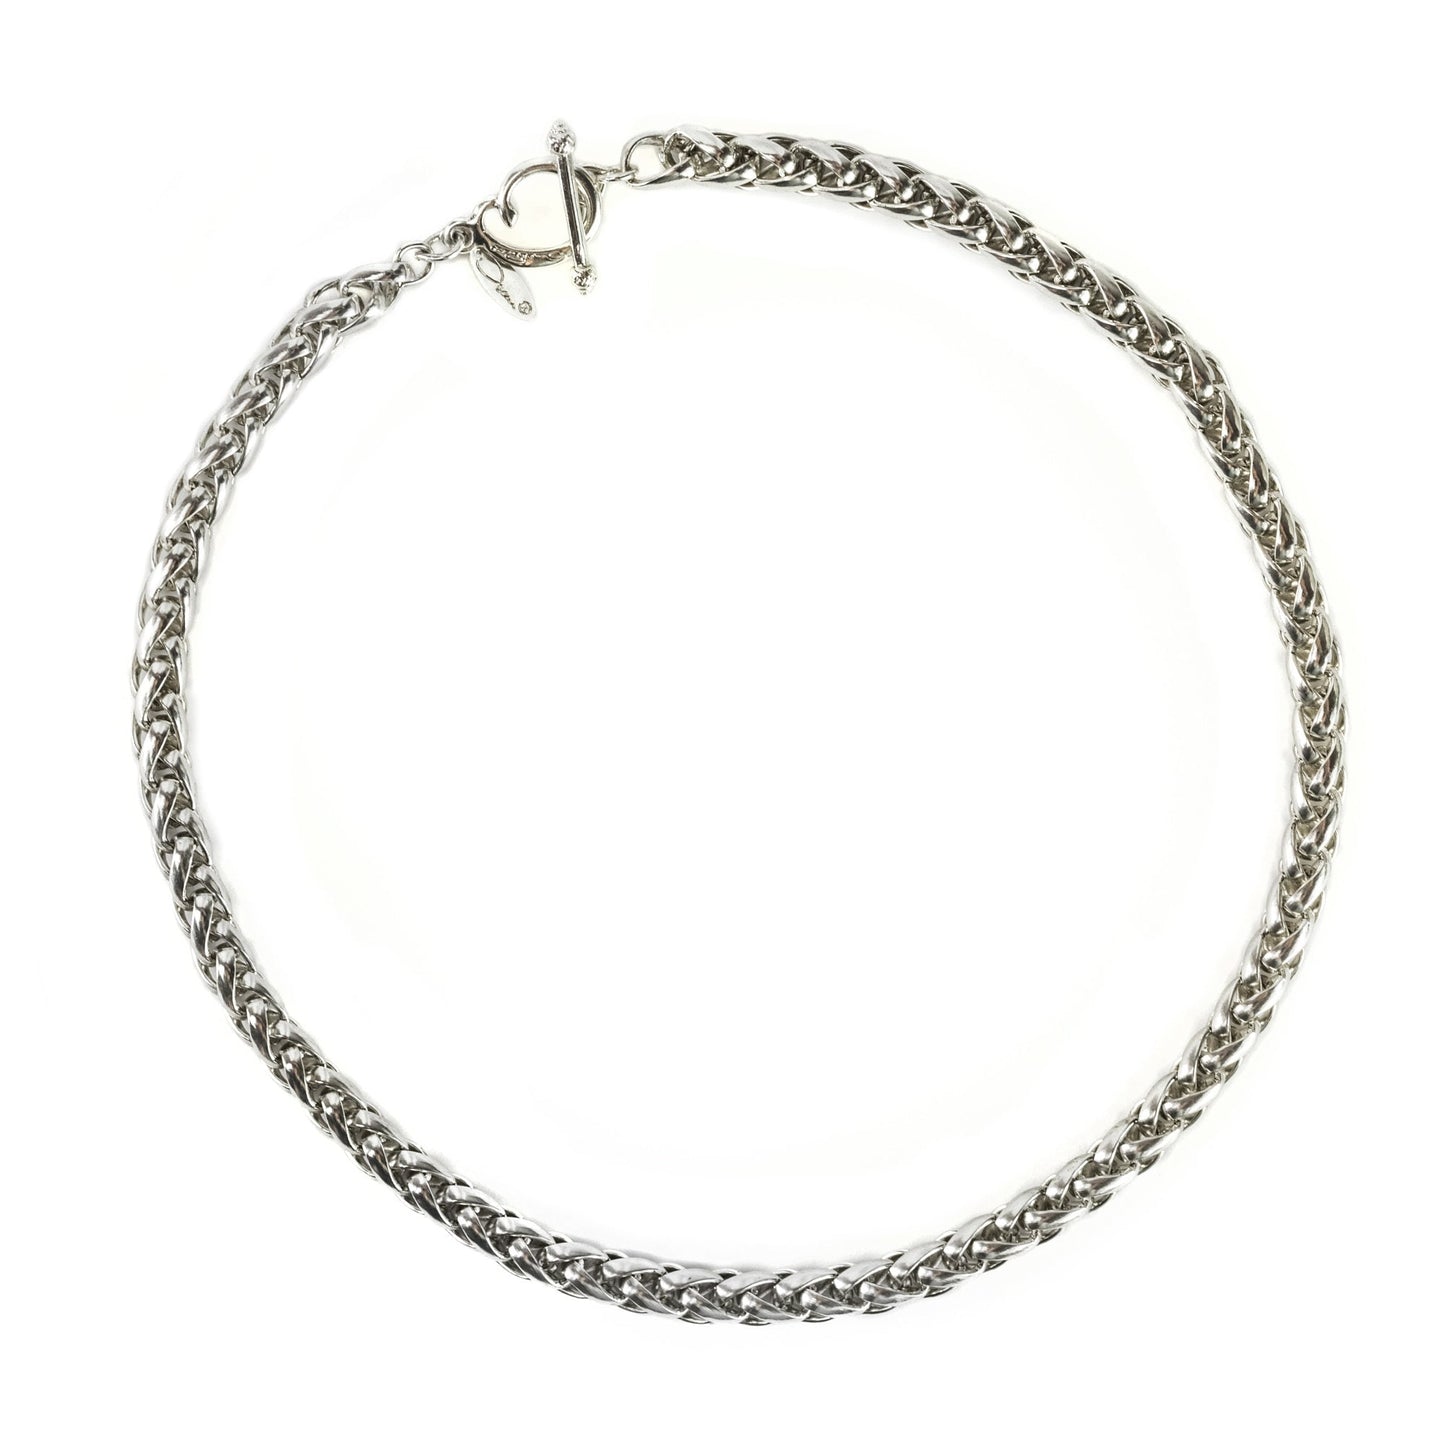 Vintage Necklaces Oscar de la Renta Necklace Antique Necklace - Limited Stock - Never Worn